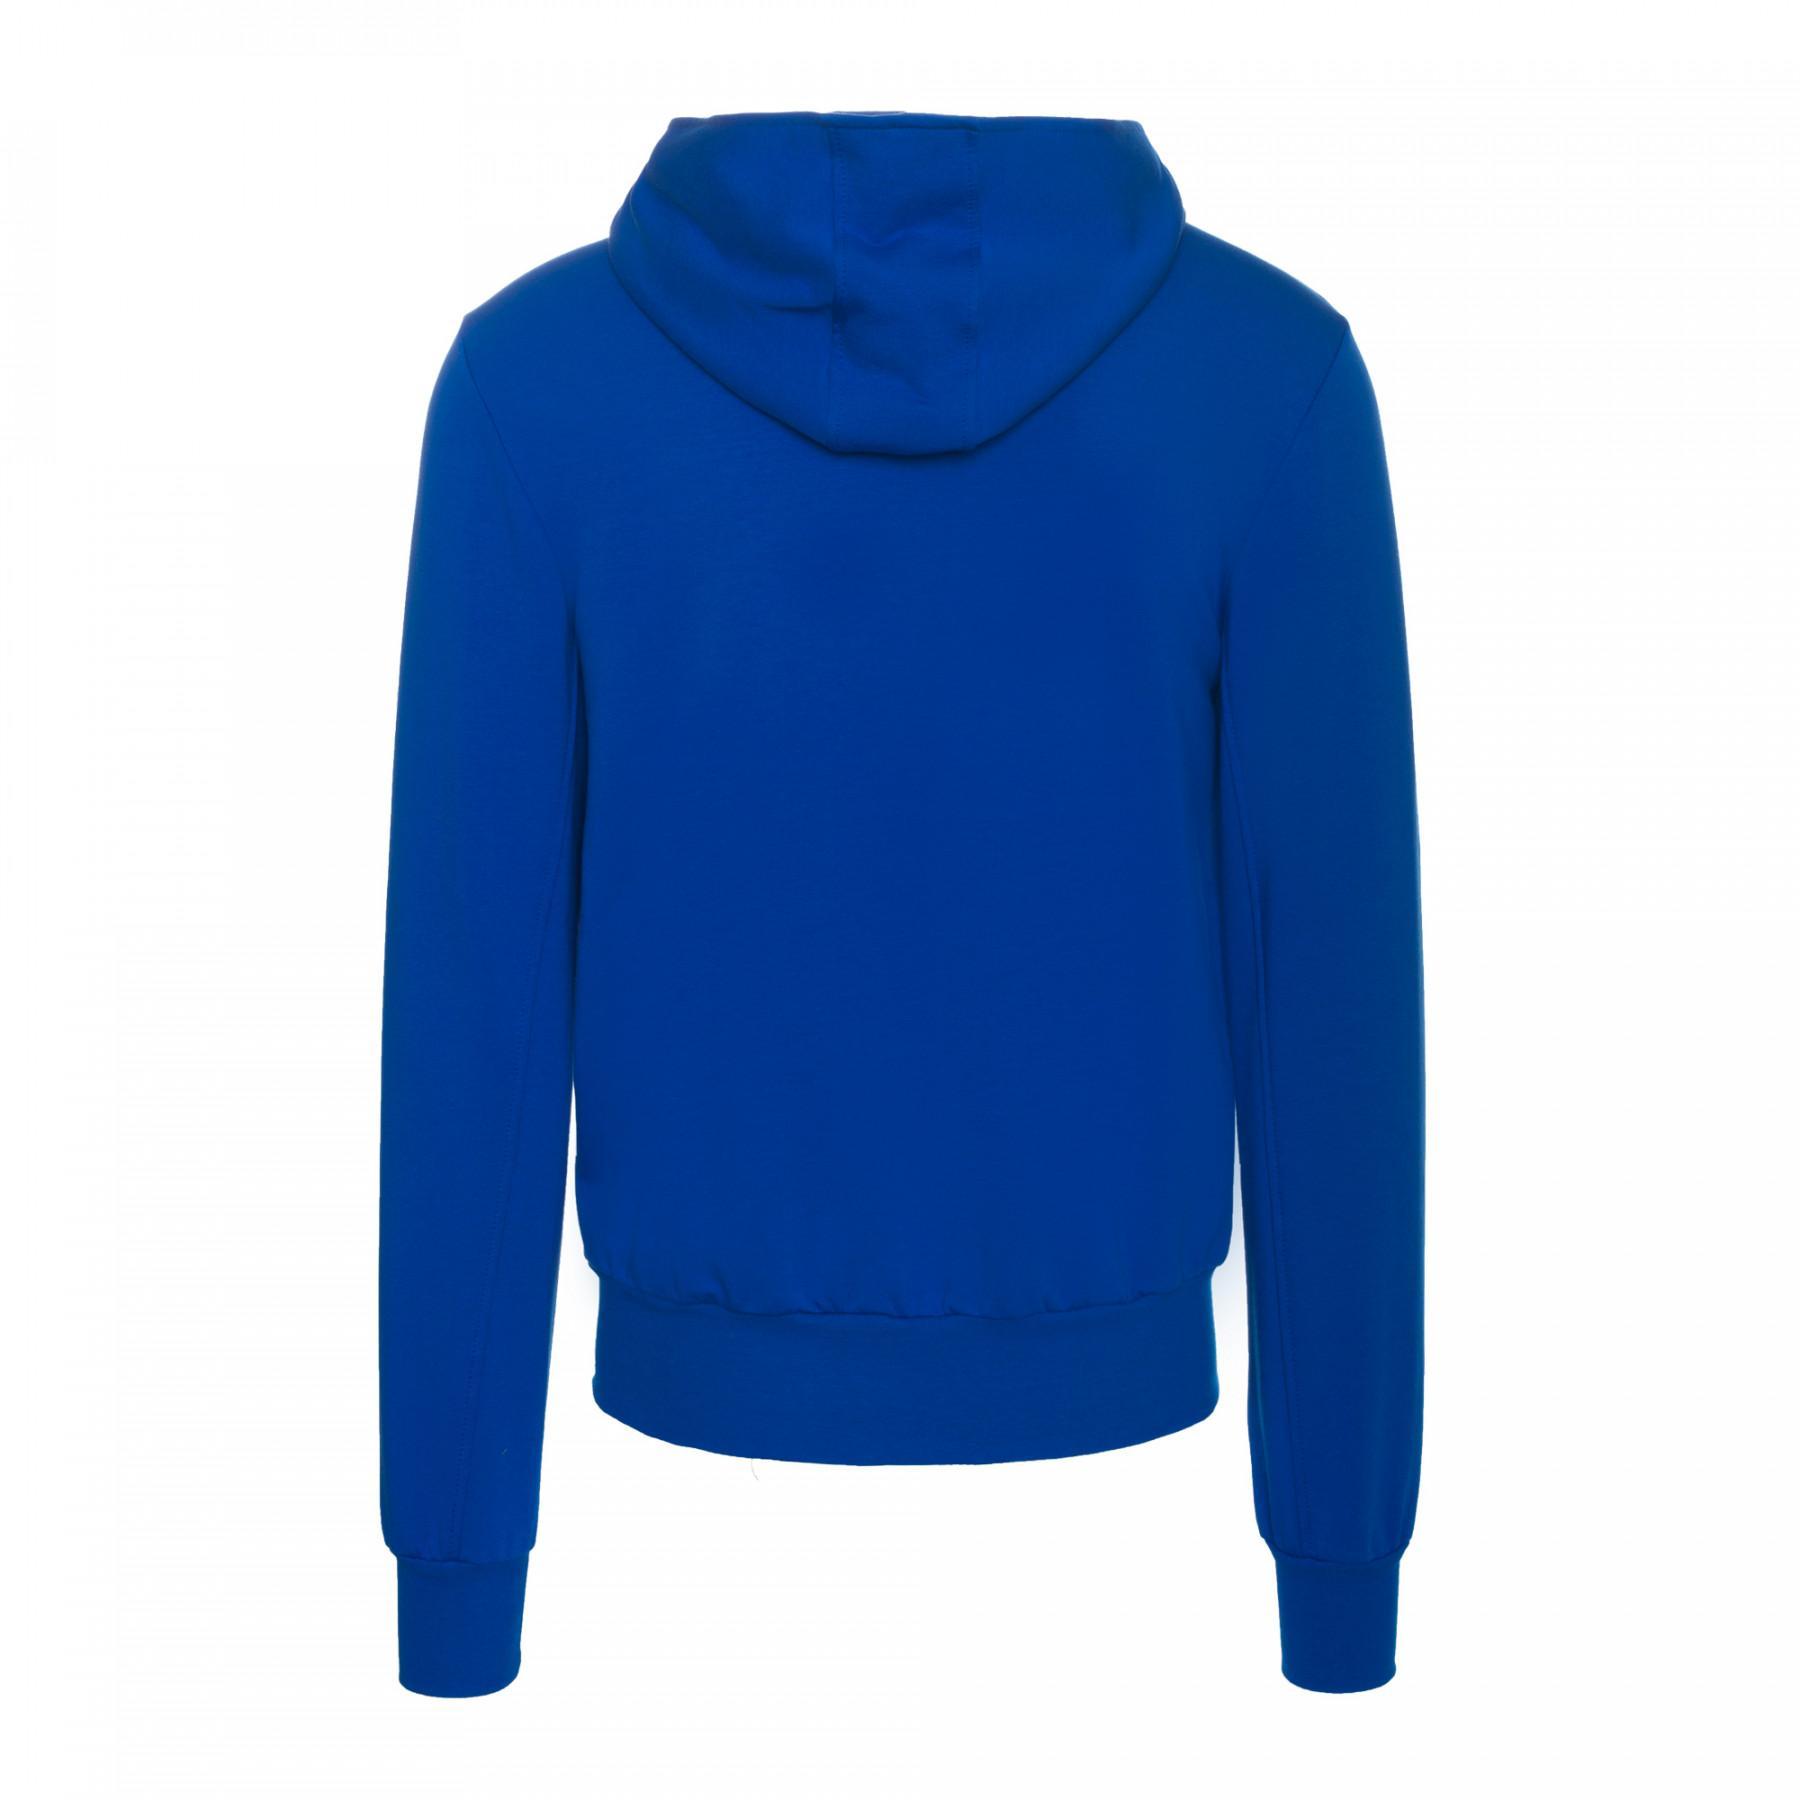 Kinder sweatshirt Errea essential hooded shirt